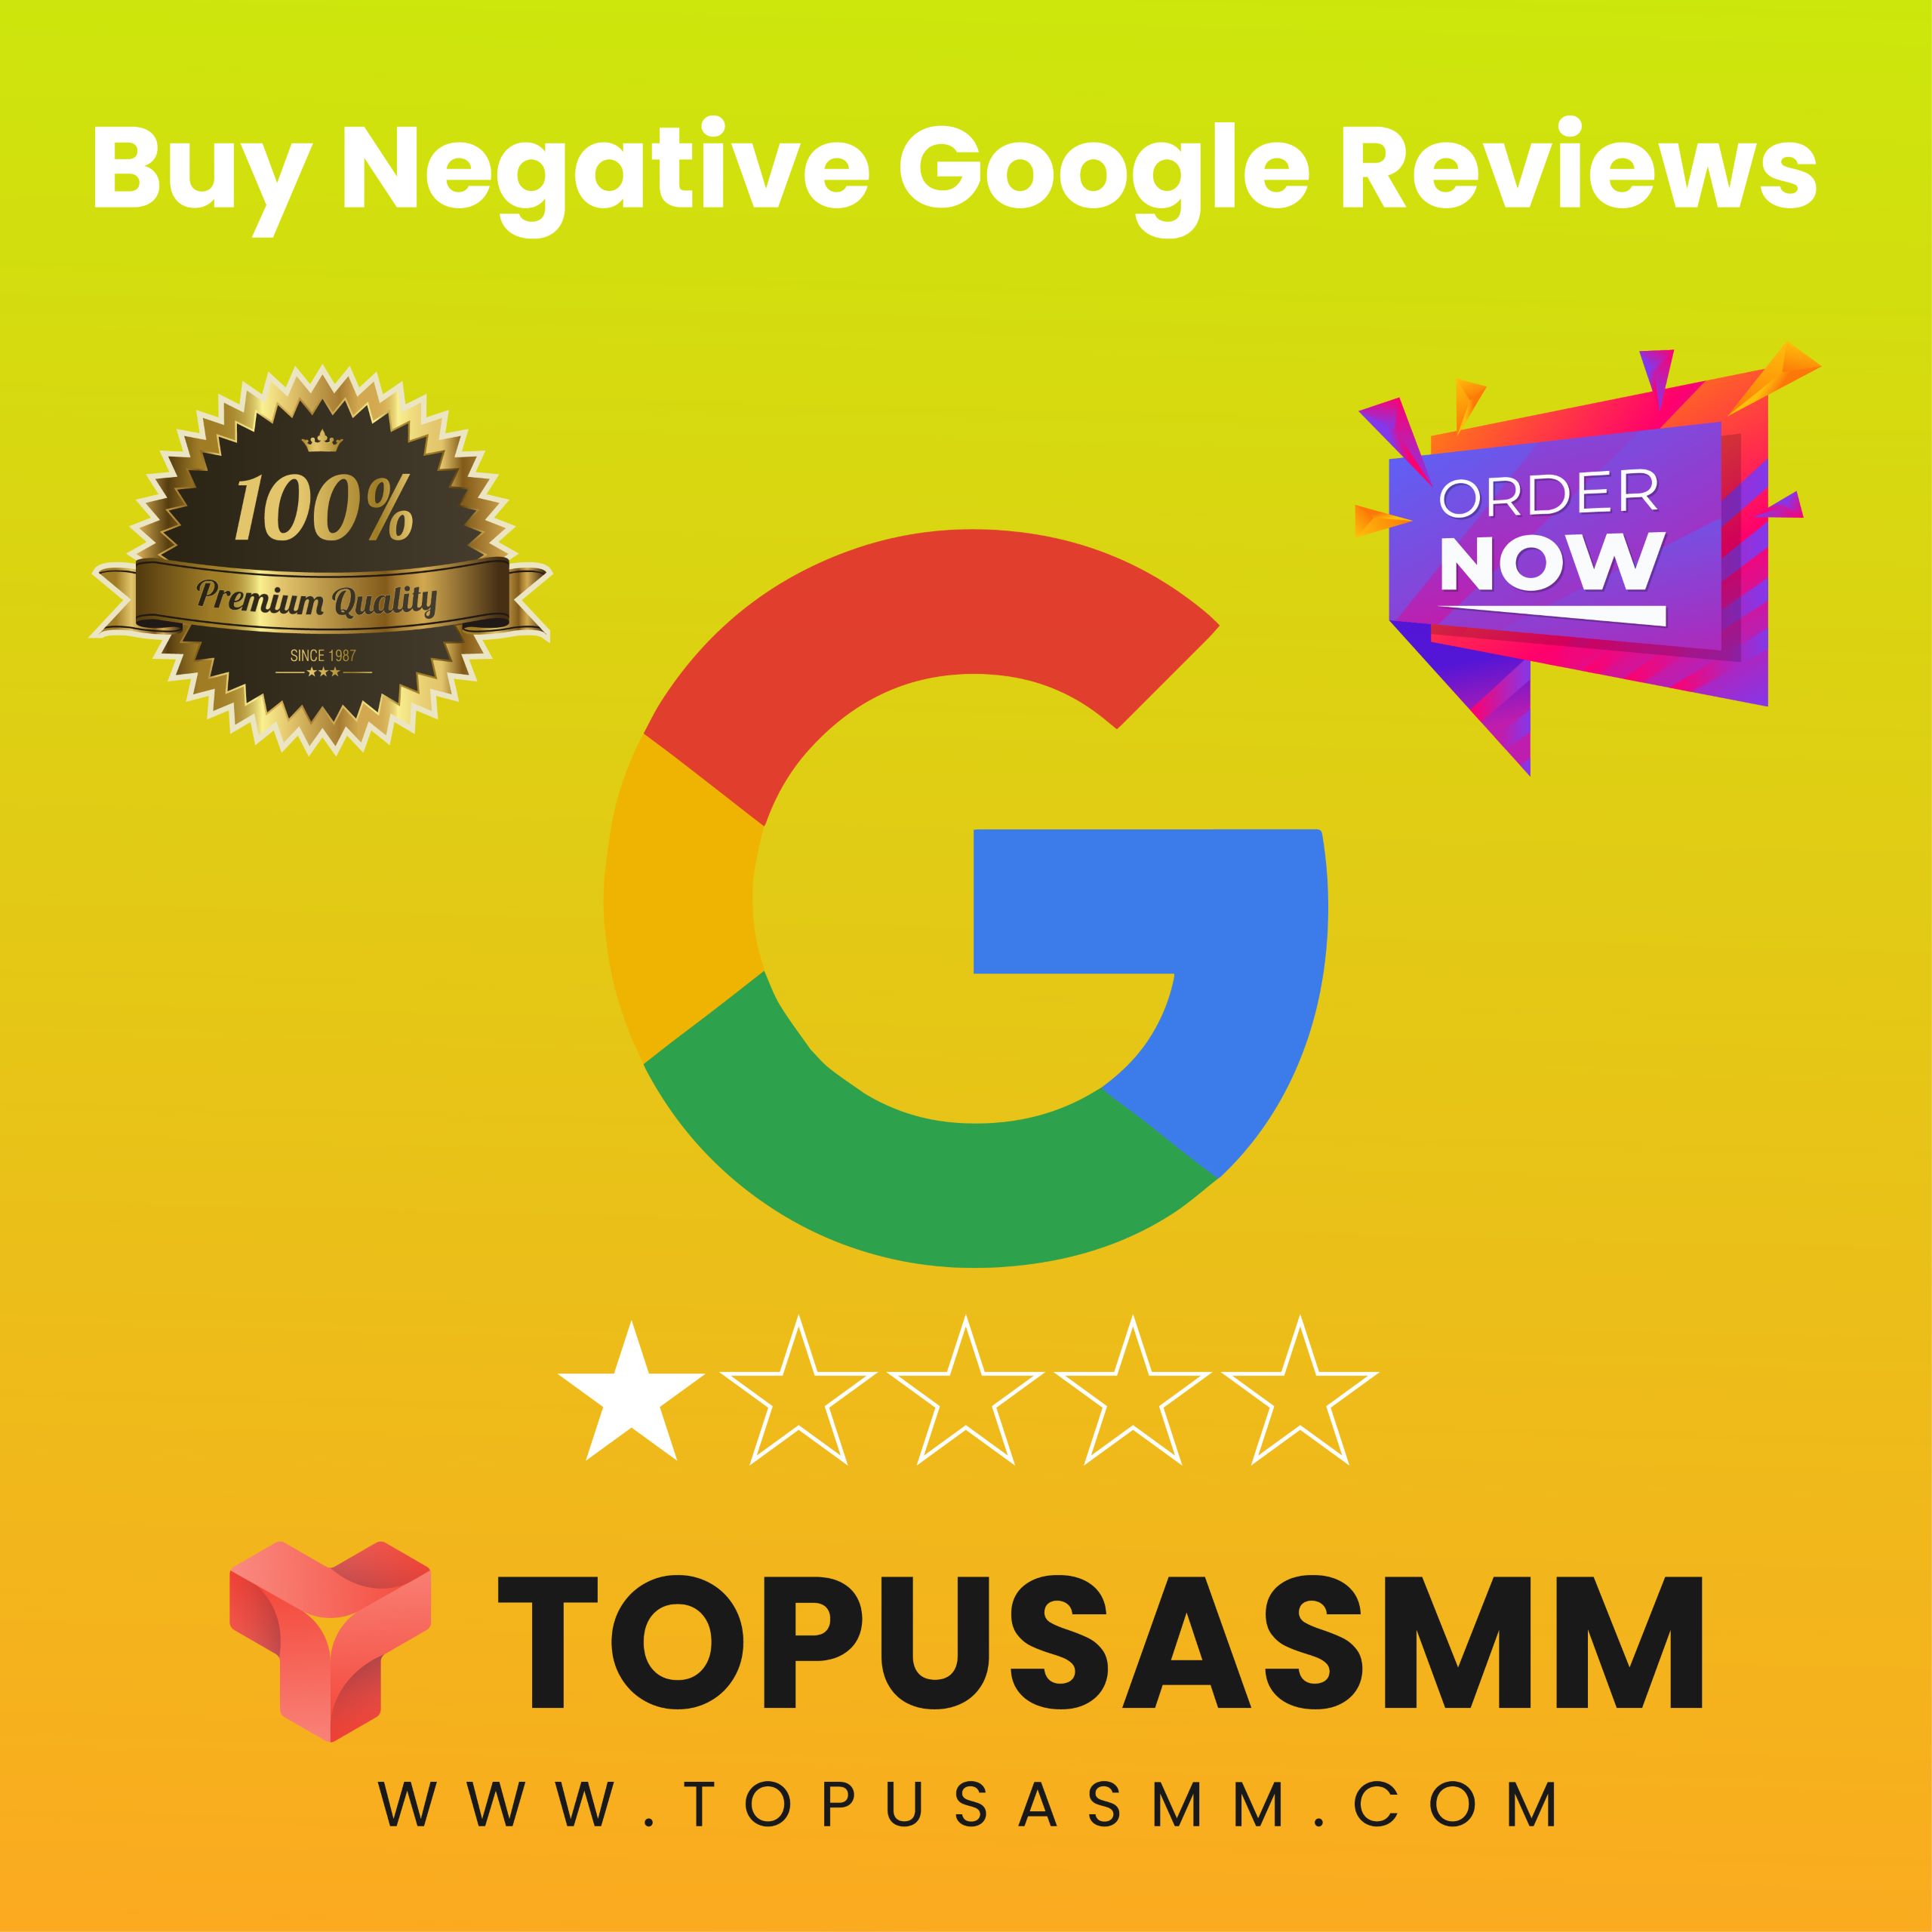 Buy Negative Google Reviews -